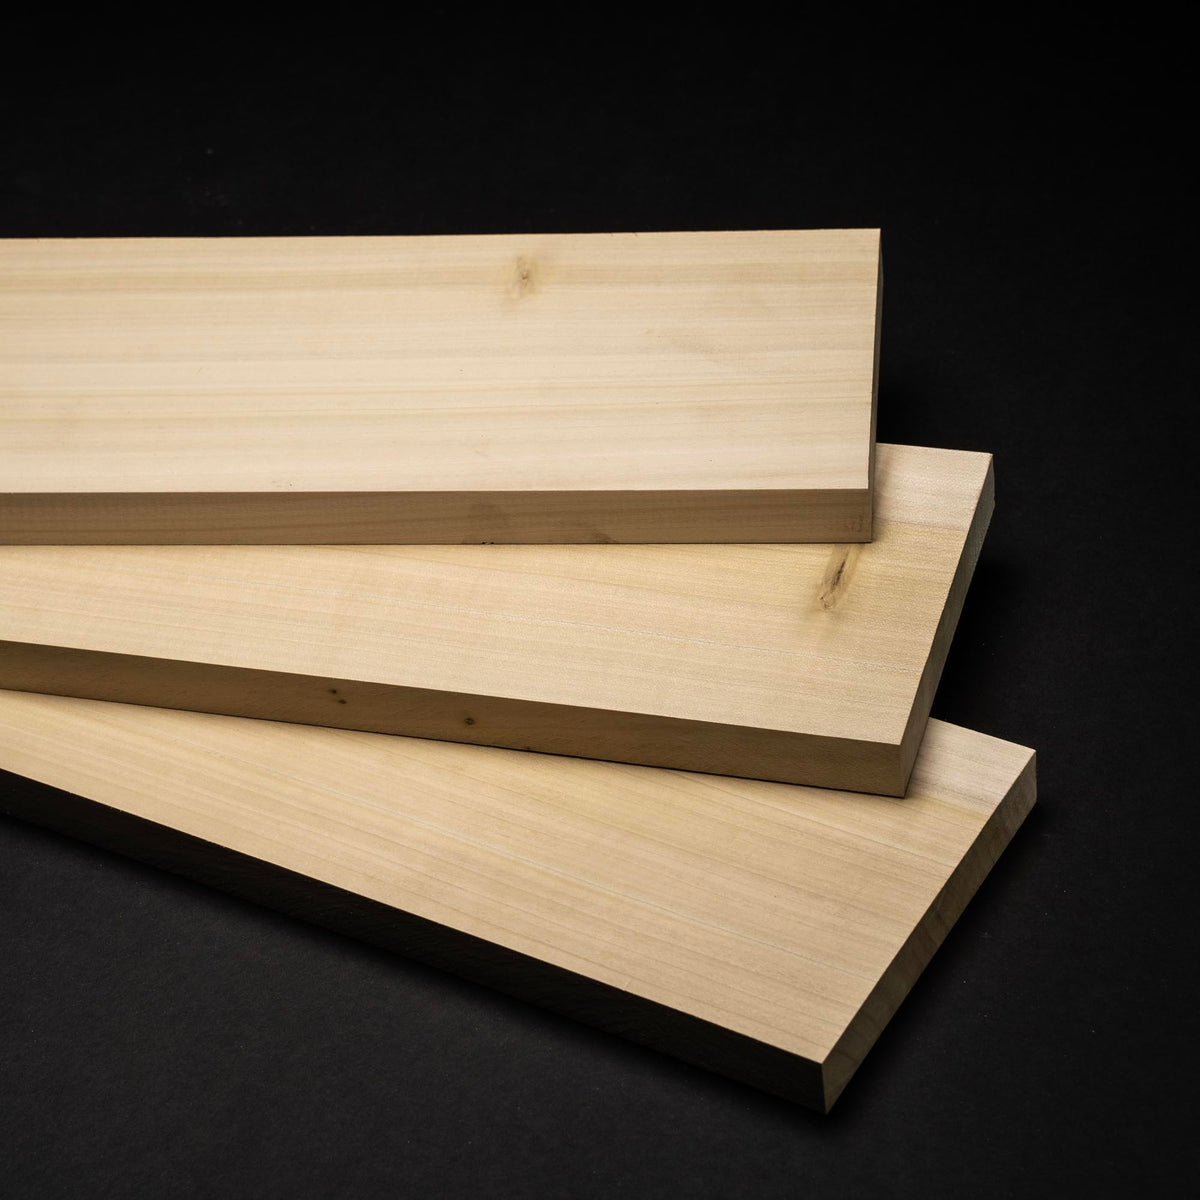 4/4 1” Poplar Boards - Kiln Dried Dimensional Lumber - Cut to Size Poplar Board